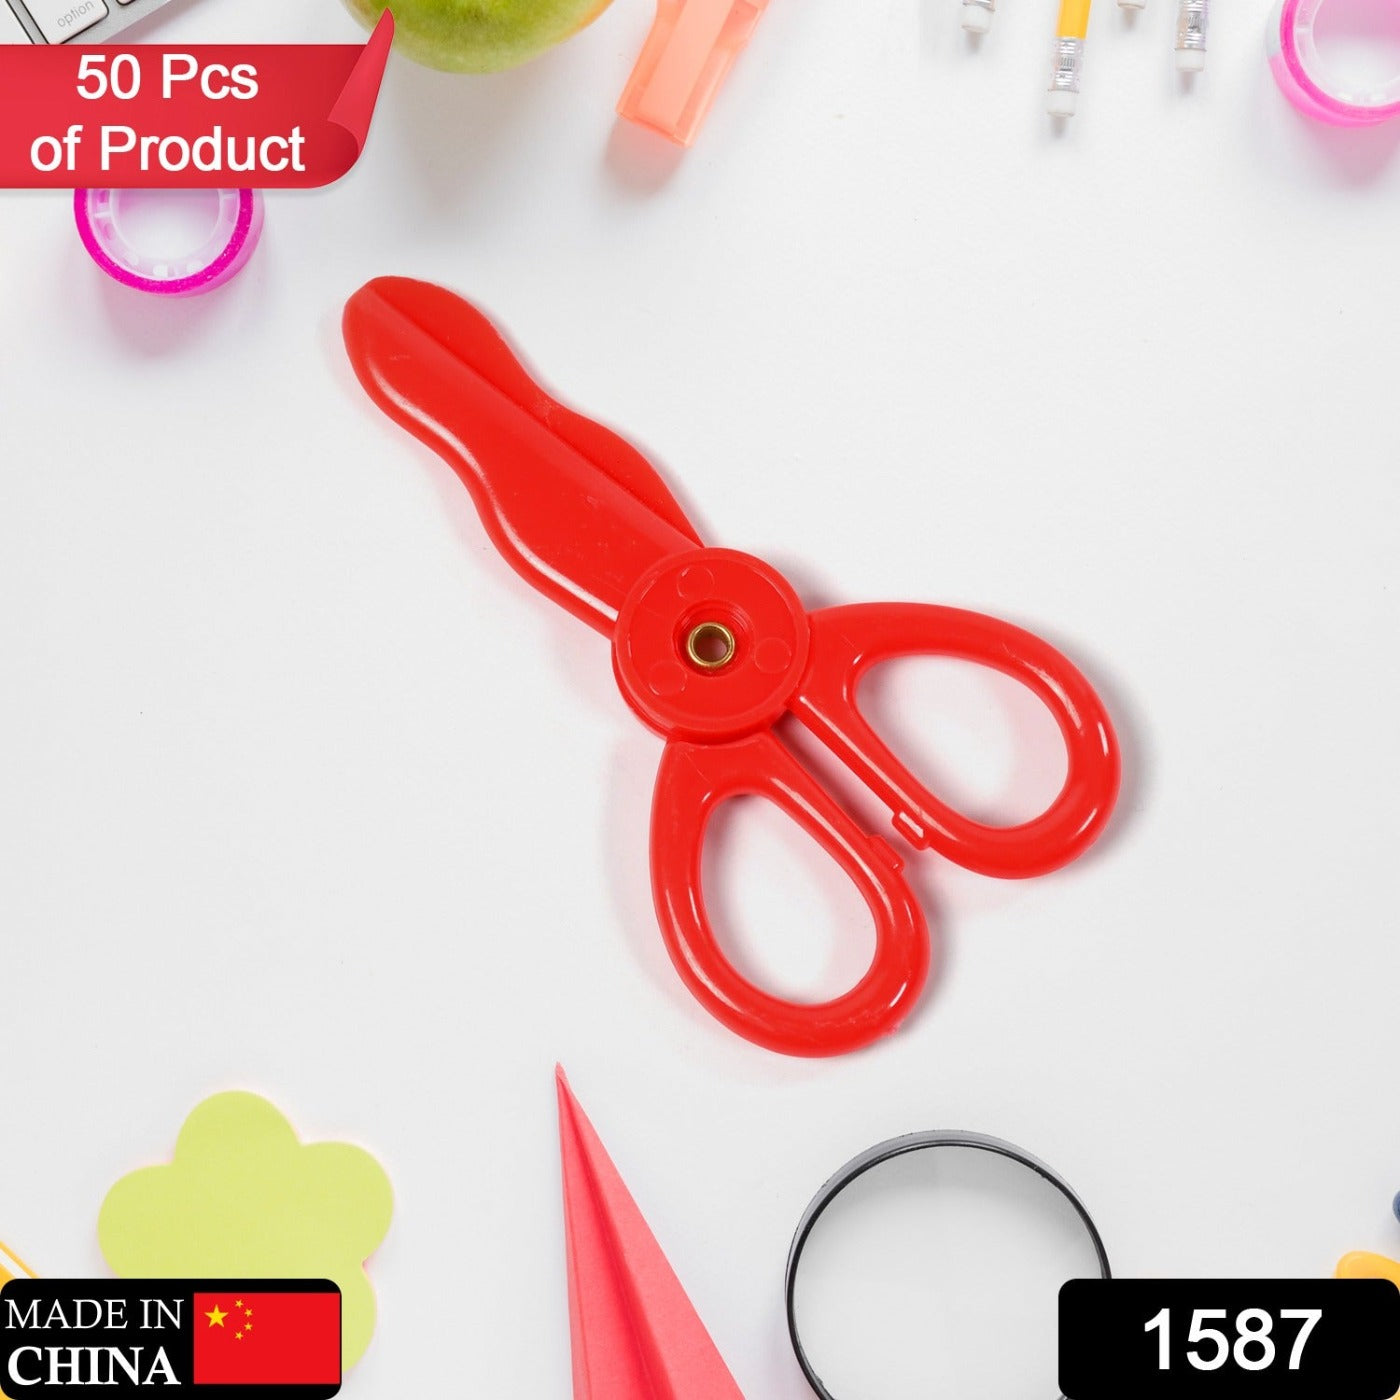 1587 Plastic Child-Safe Scissor Set, Toddlers Training Scissors, Pre-School Training Scissors and Children Art Supplies JK Trends